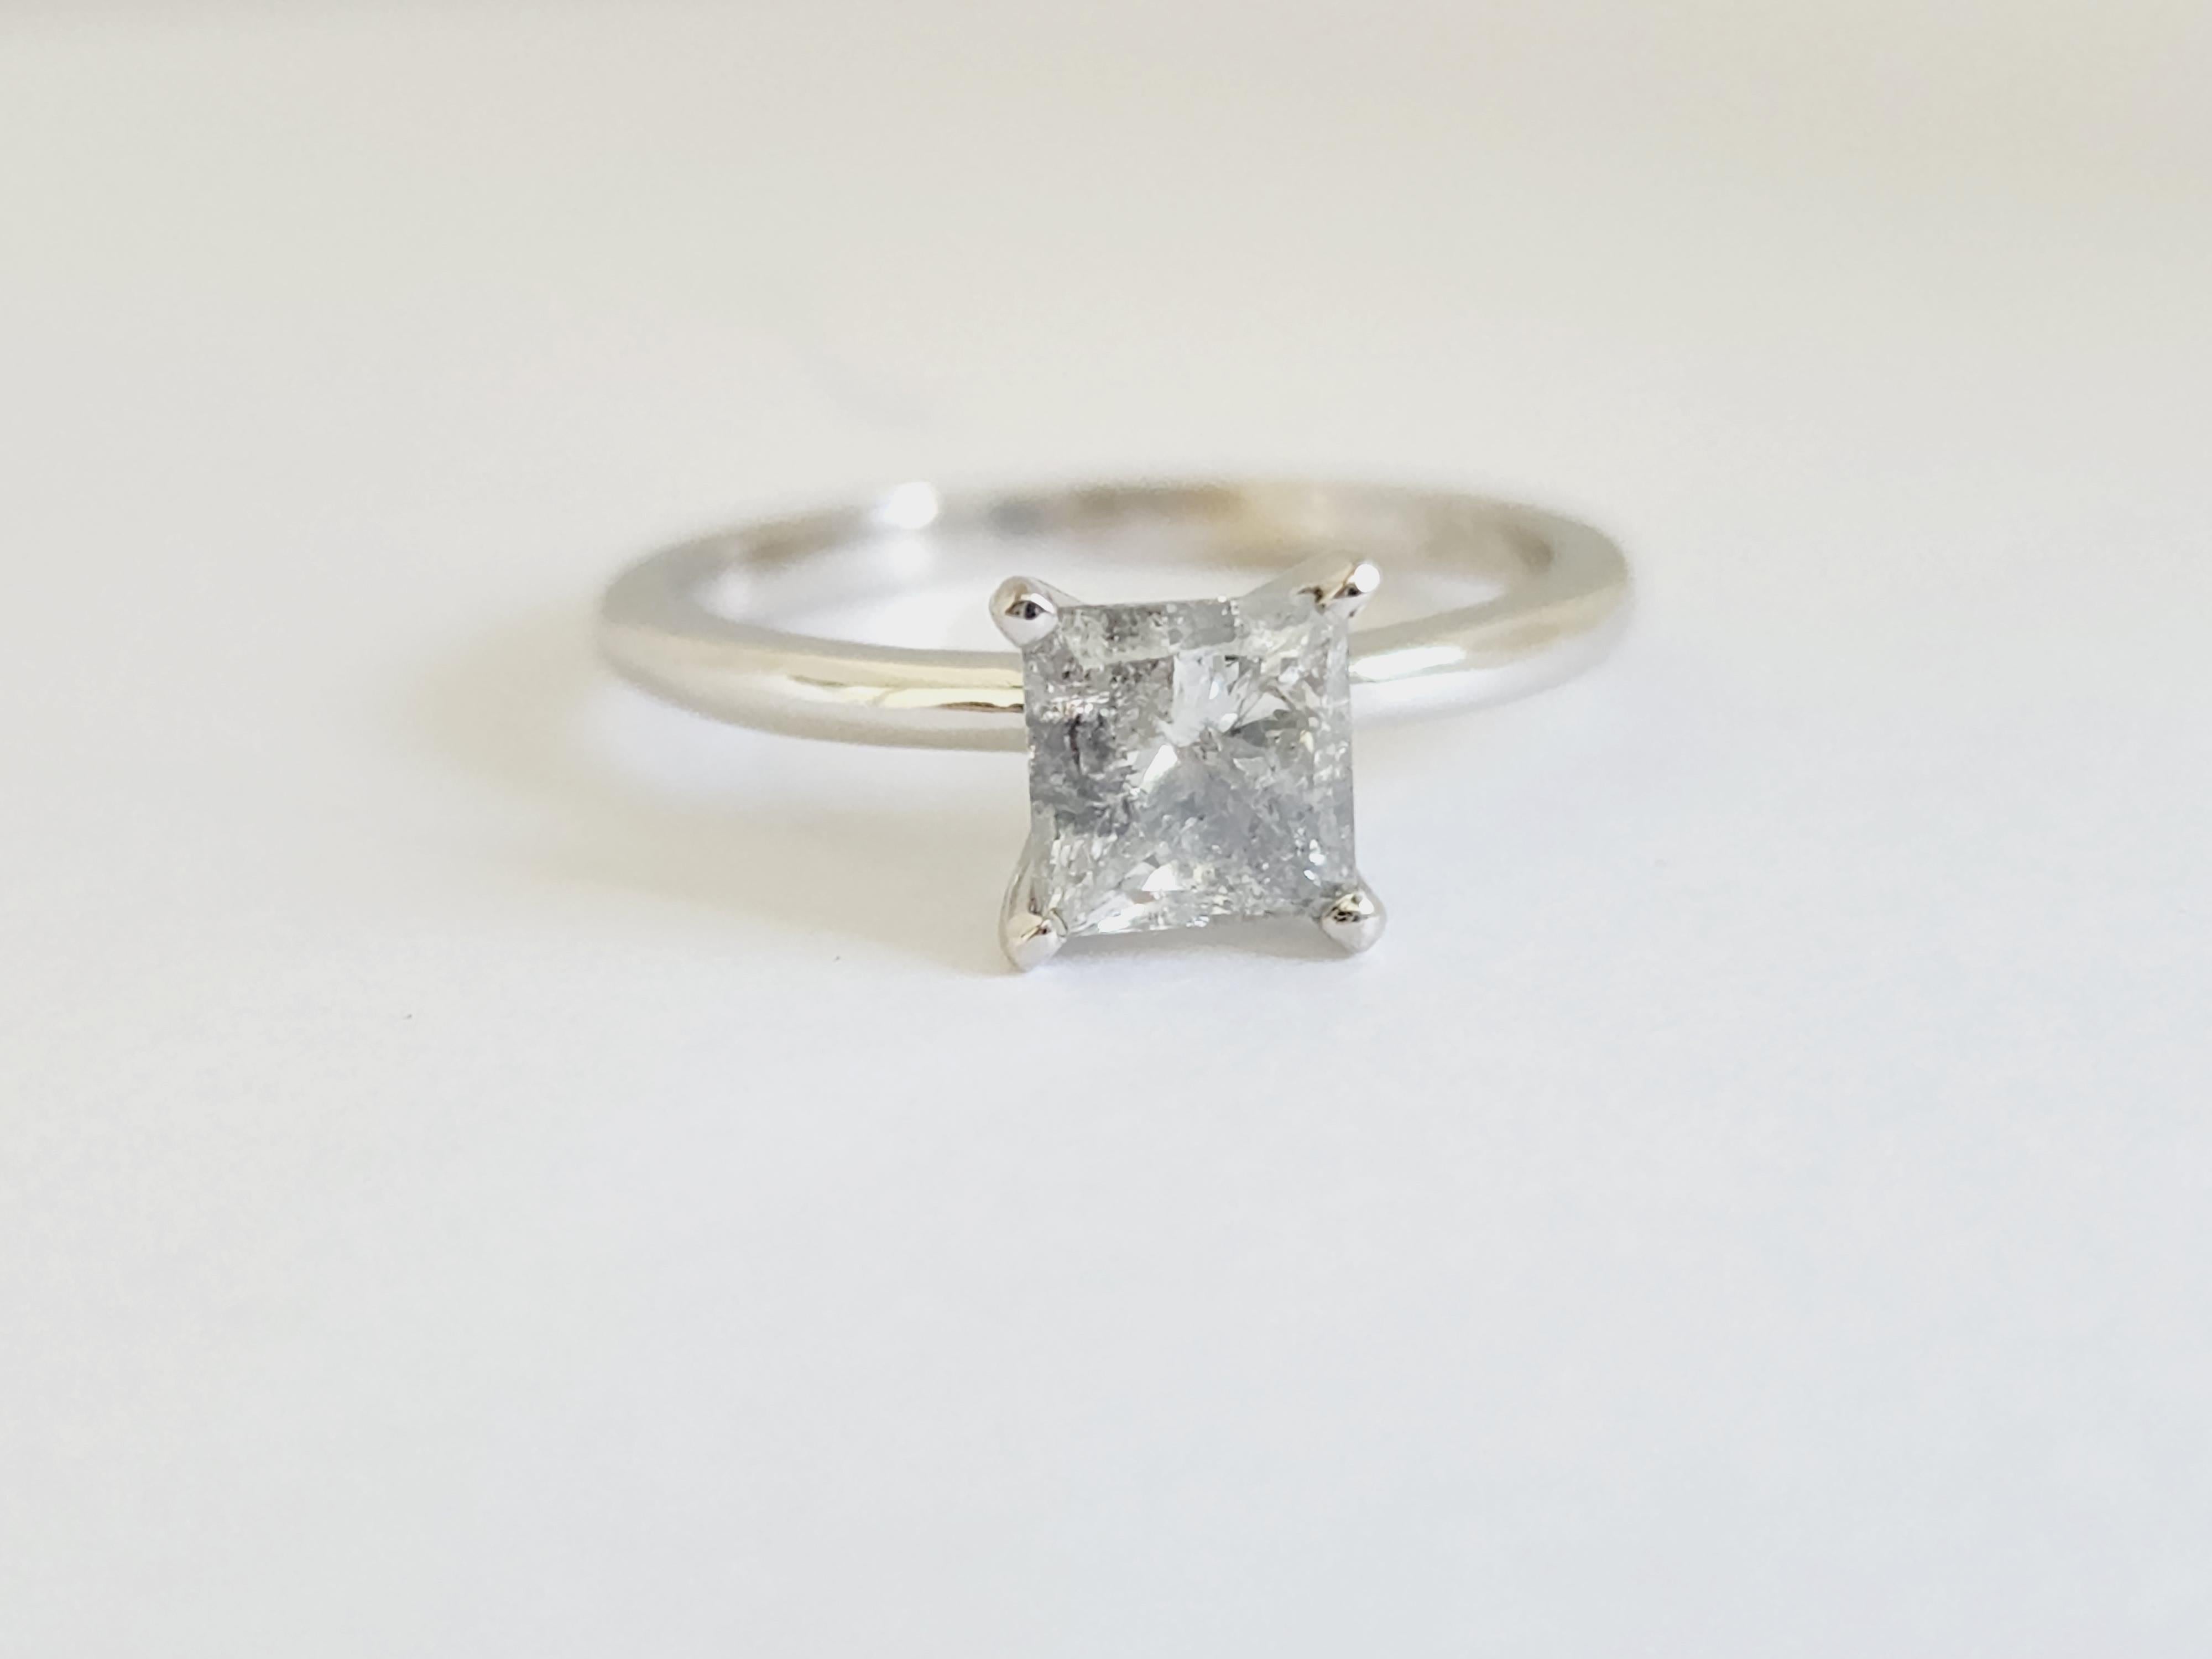 GIA 1.03 Carat Fancy Light Gray Princess Cut Natural Diamond White Gold Ring 14K

Ring Size 6.5